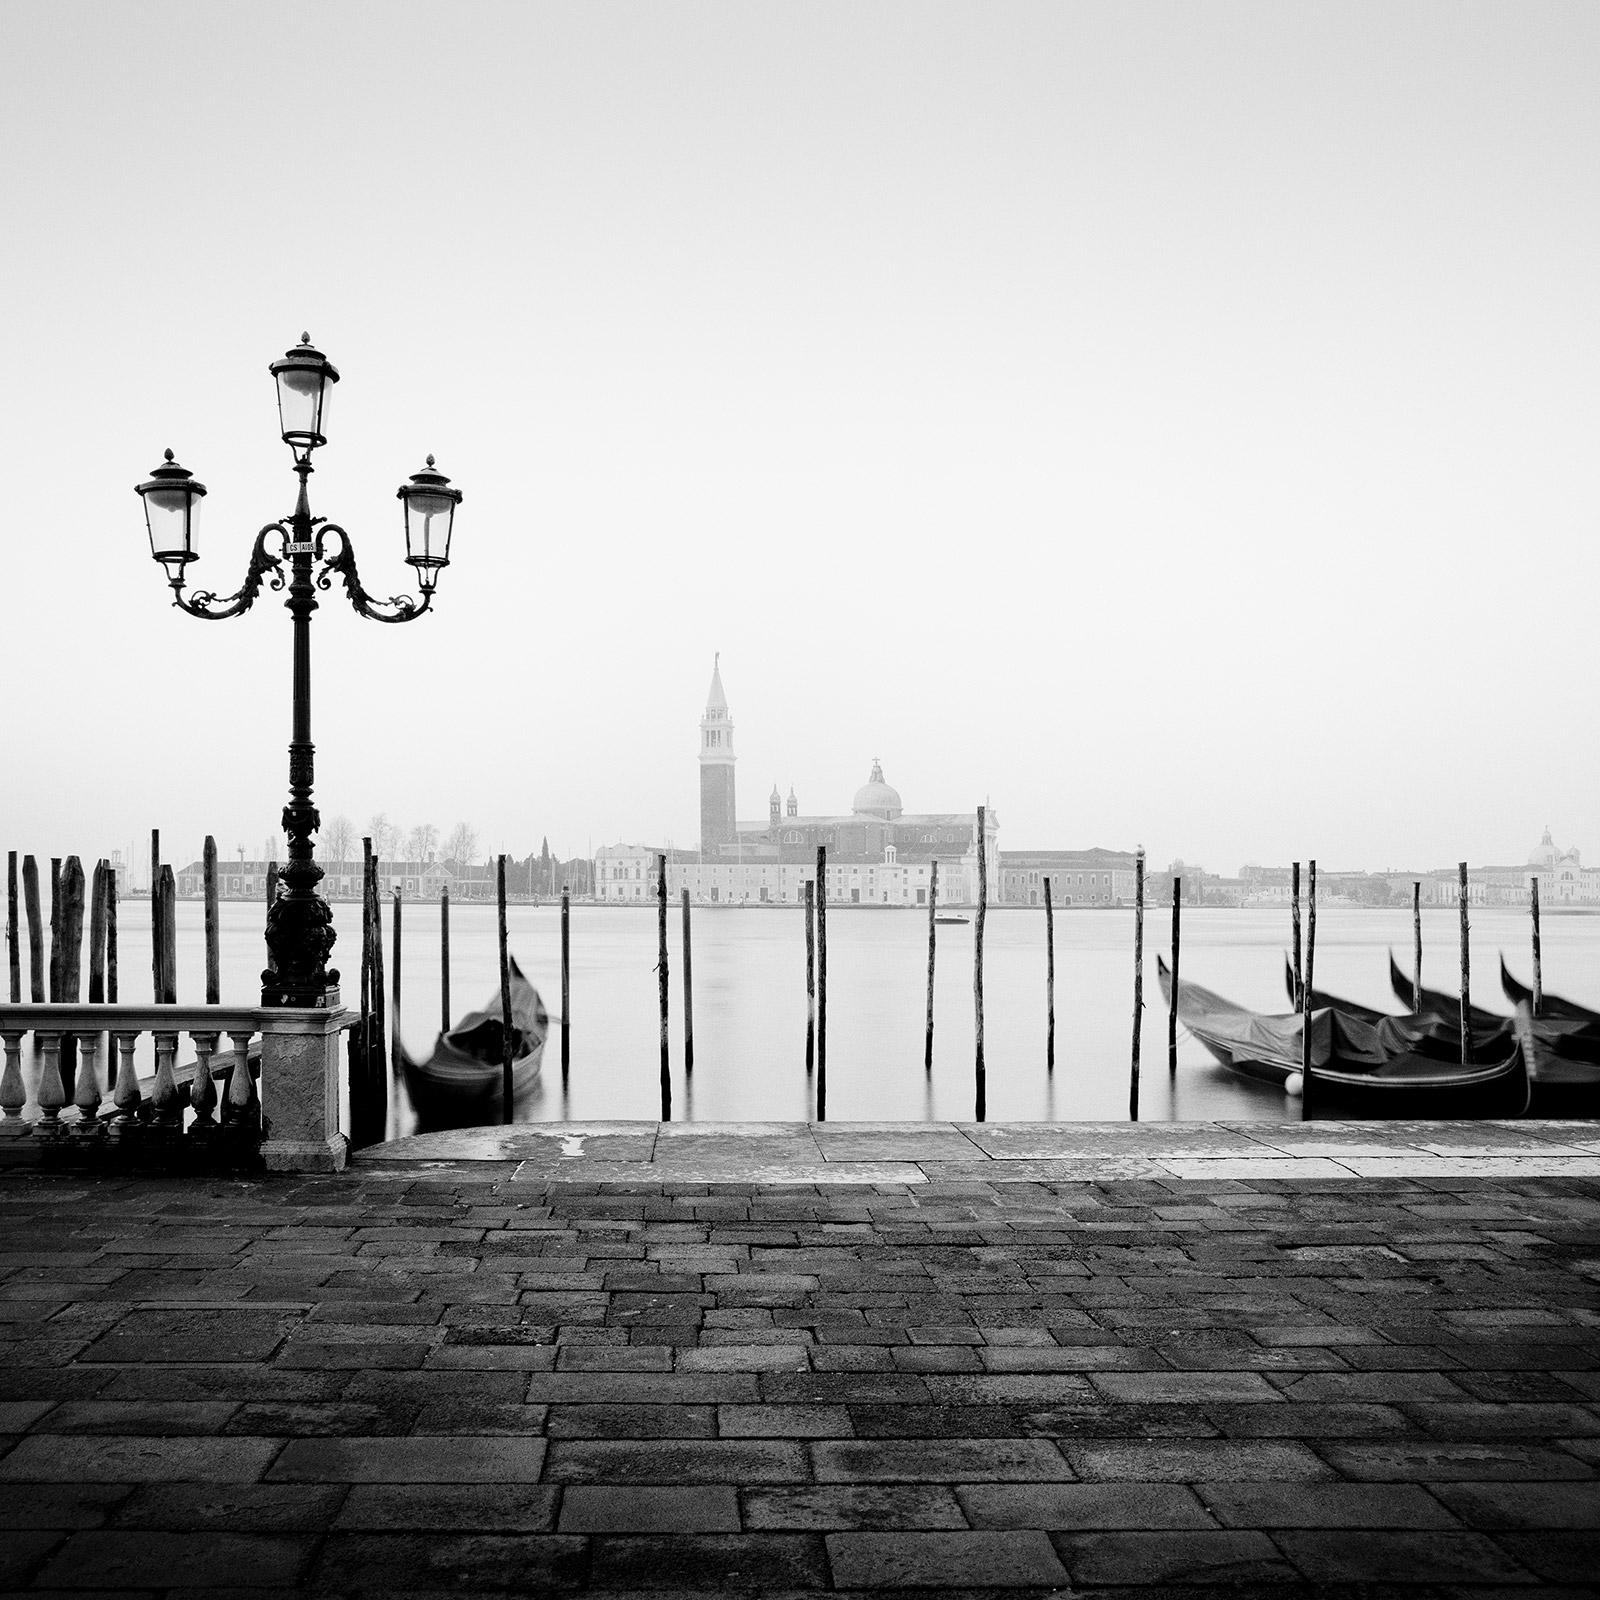 Plus A Space Basilica Venice Italy black white fine art landscape photography